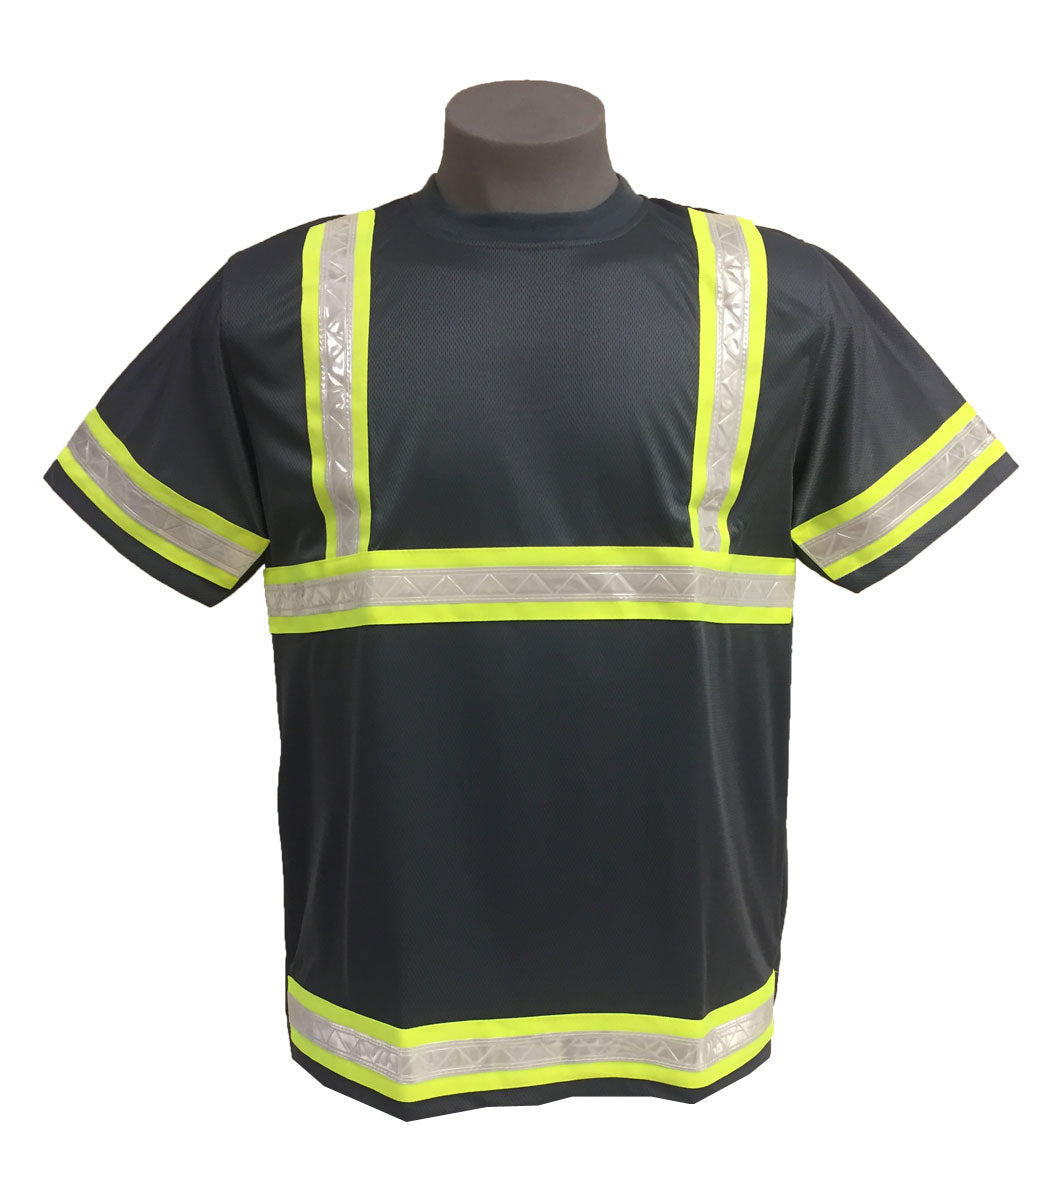 Incentex Safety Gear Men's Mesh Reflective T-Shirt